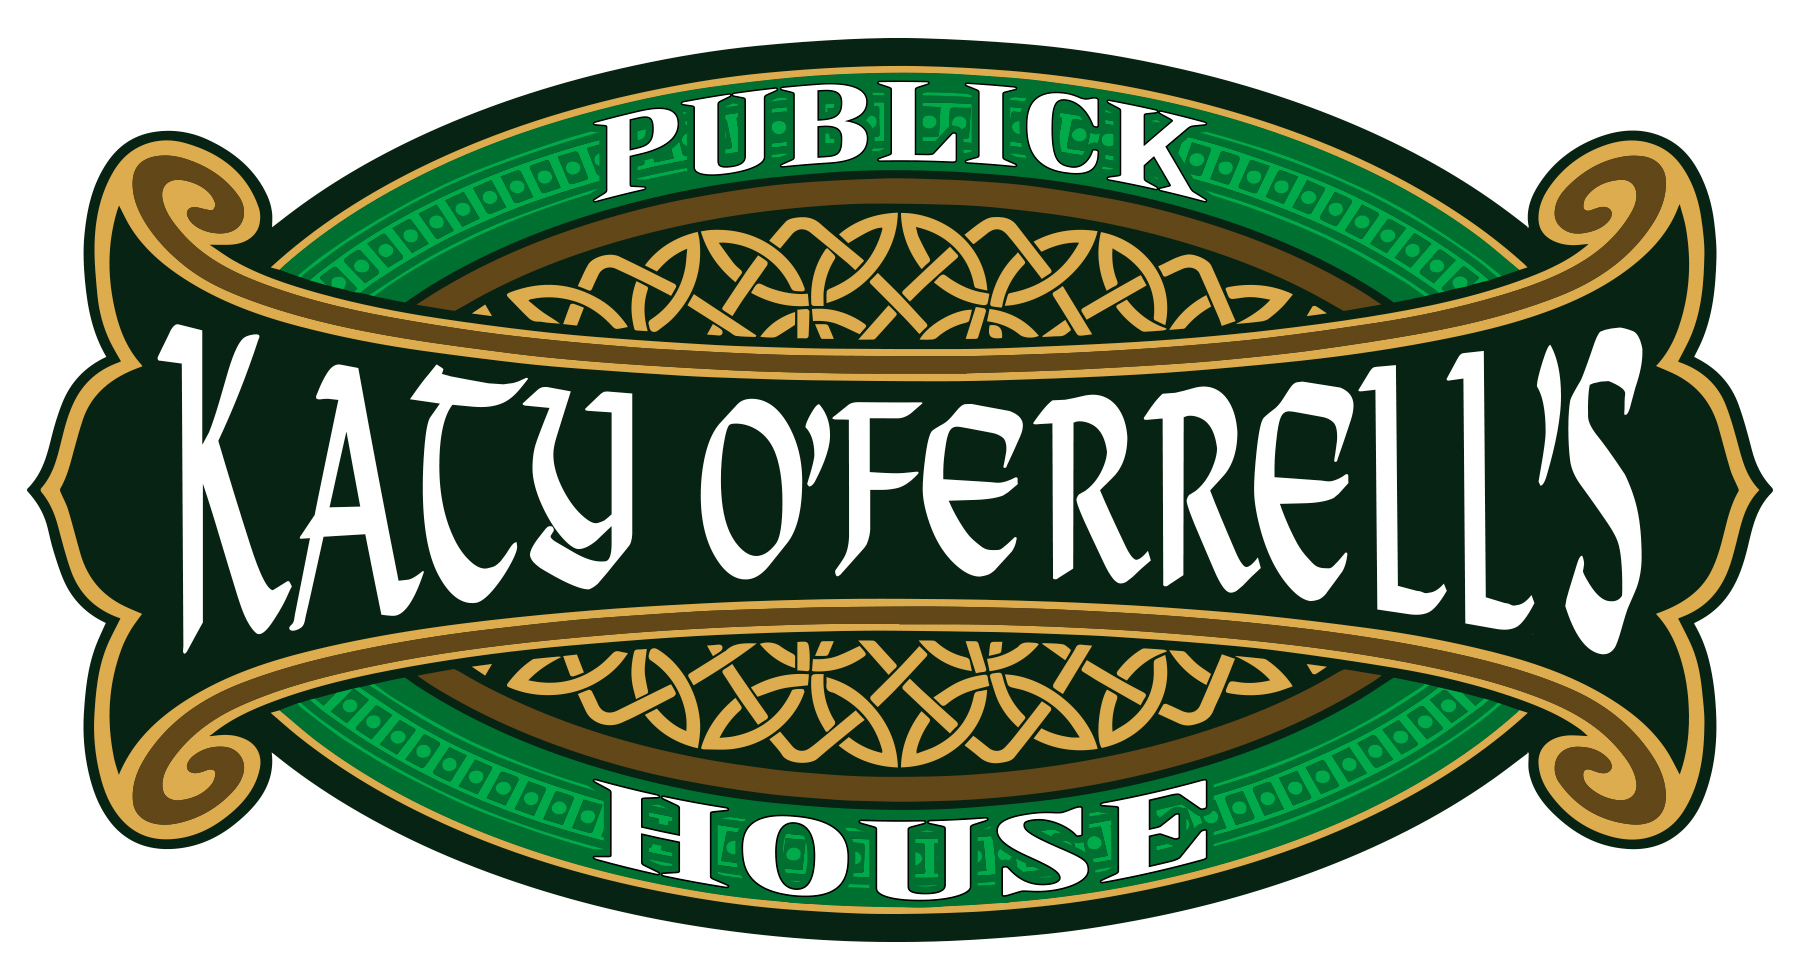 Katy O'Ferrell's Irish Pub & Restaurant